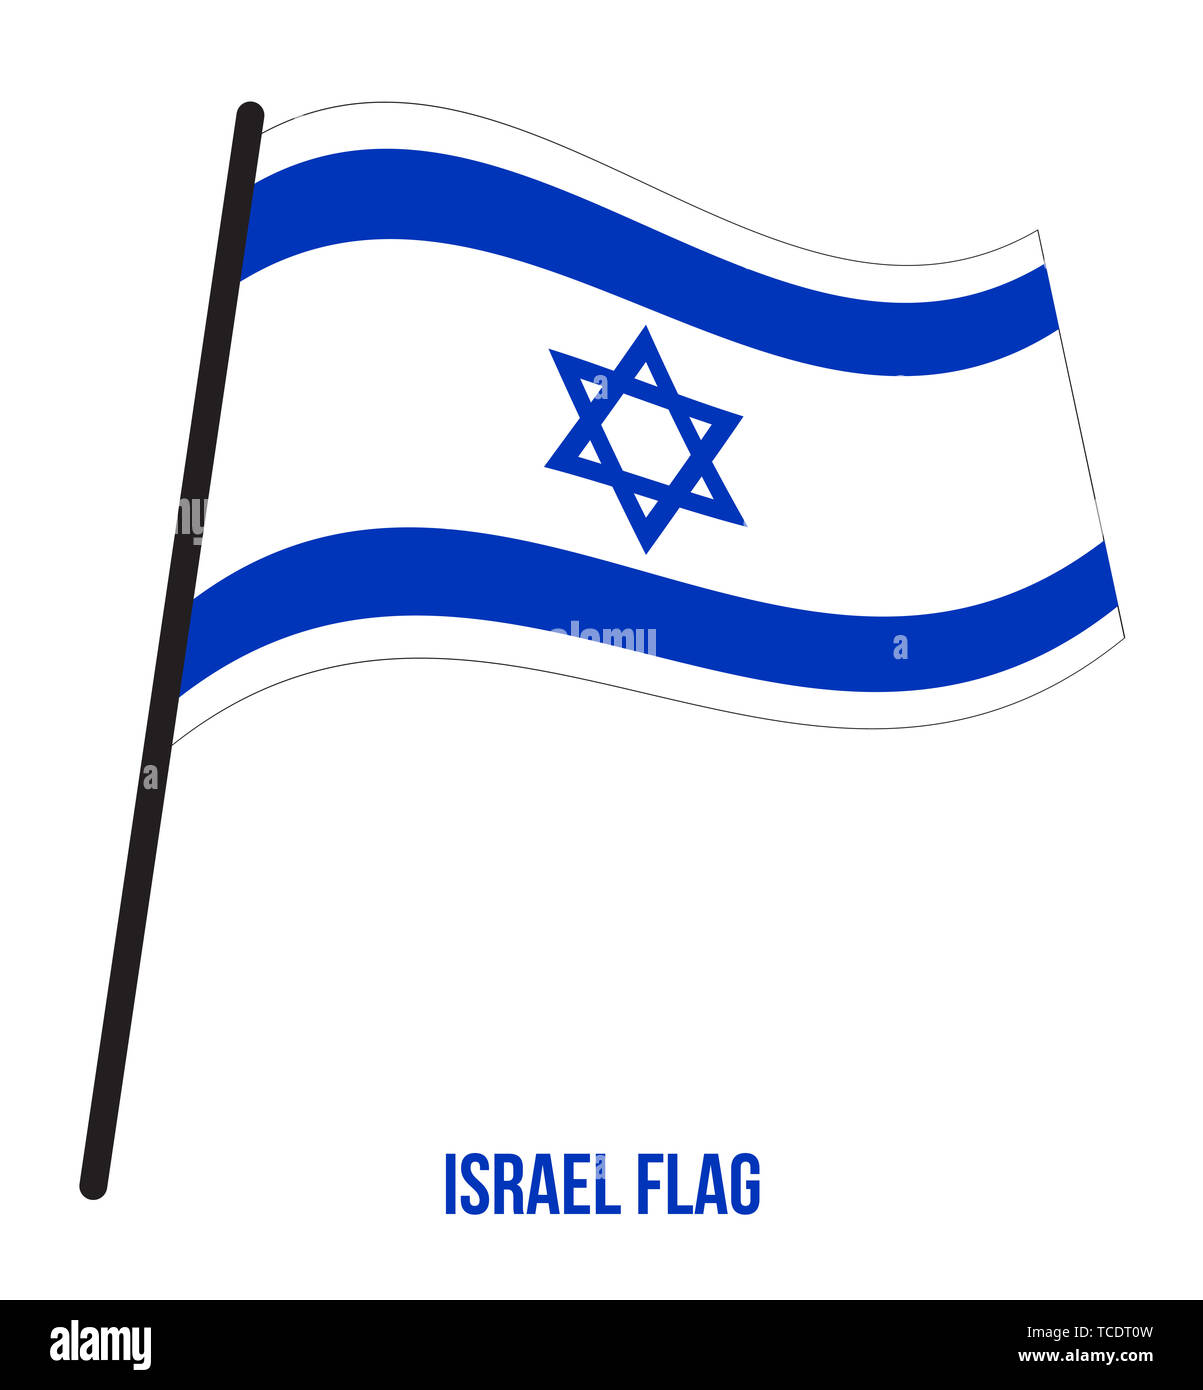 Israel Flag Waving Vector Illustration on White Background. Israel National Flag. Stock Photo